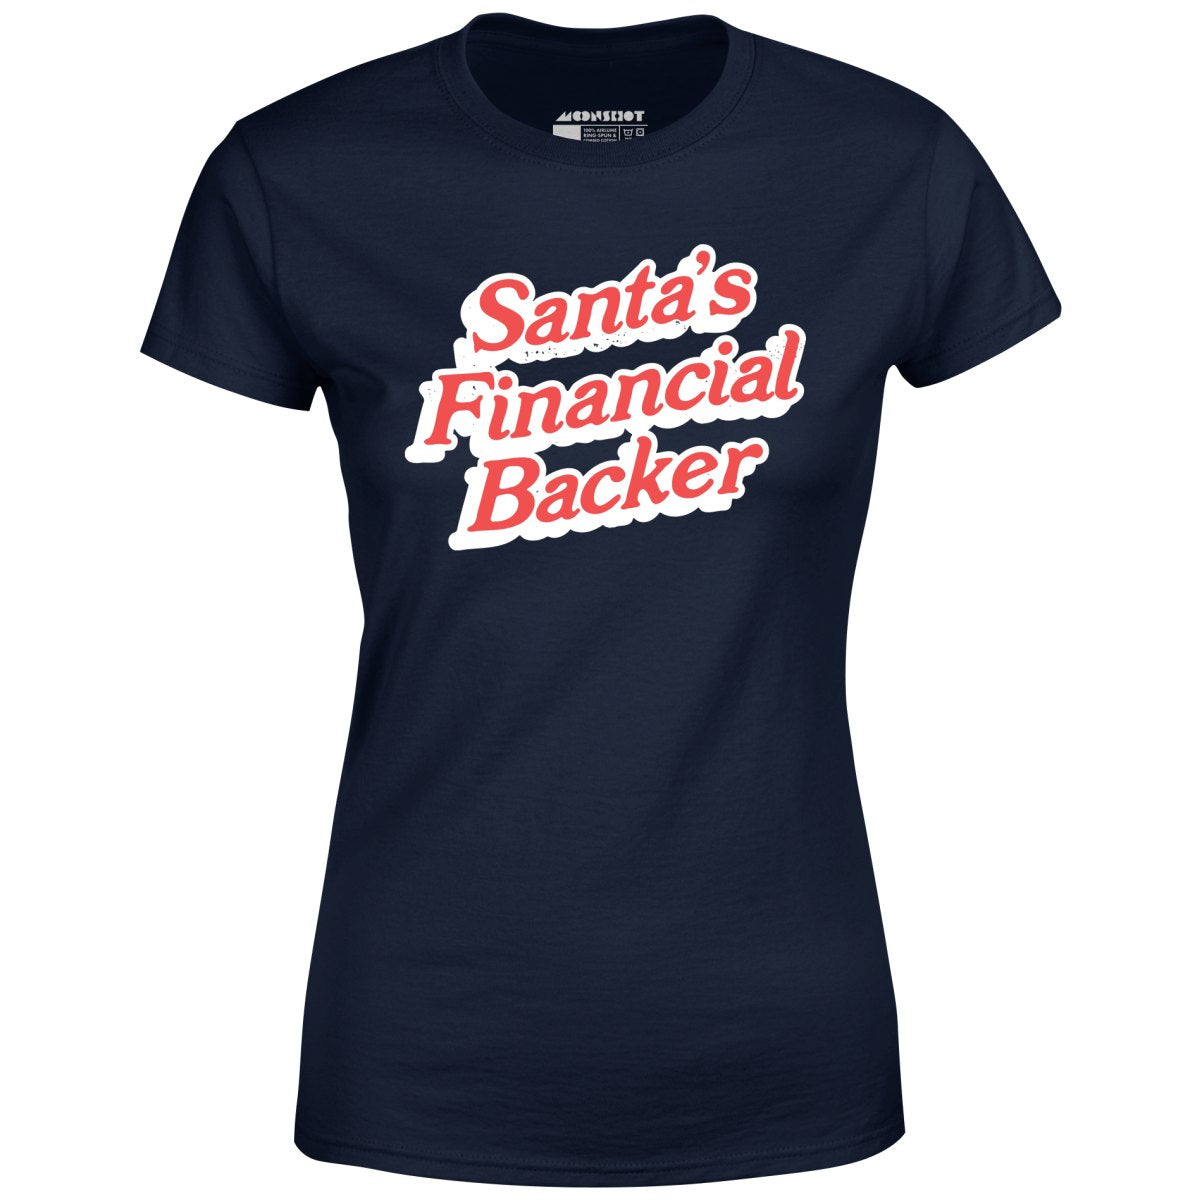 Santa's Financial Backer - Women's T-Shirt